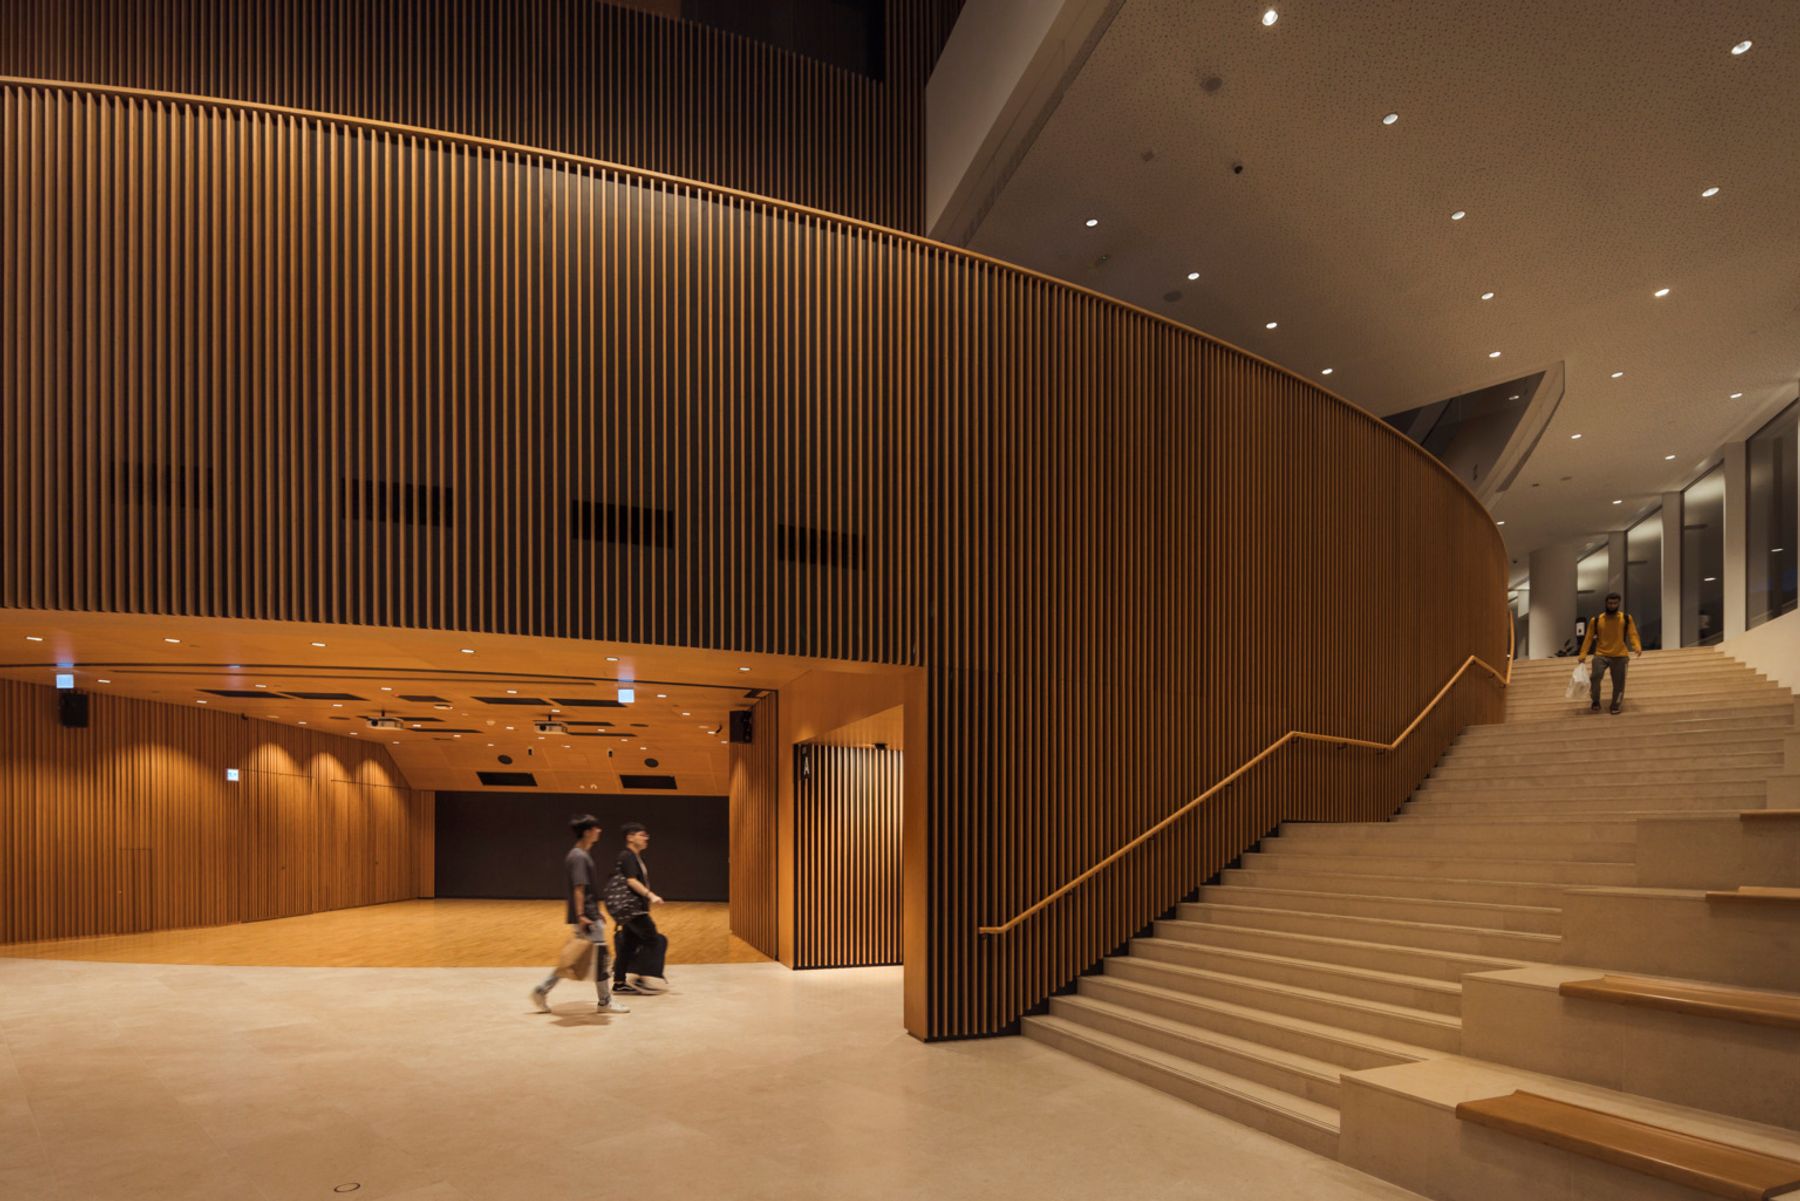 University of Science and Technology, Shaw Auditorium, Hong Kong. Architettura: Henning Larsen / Wong Tung and Partners (Executive). Progettazione illuminotecnica: Inhabit group. Fotografia: Jackie Chan.